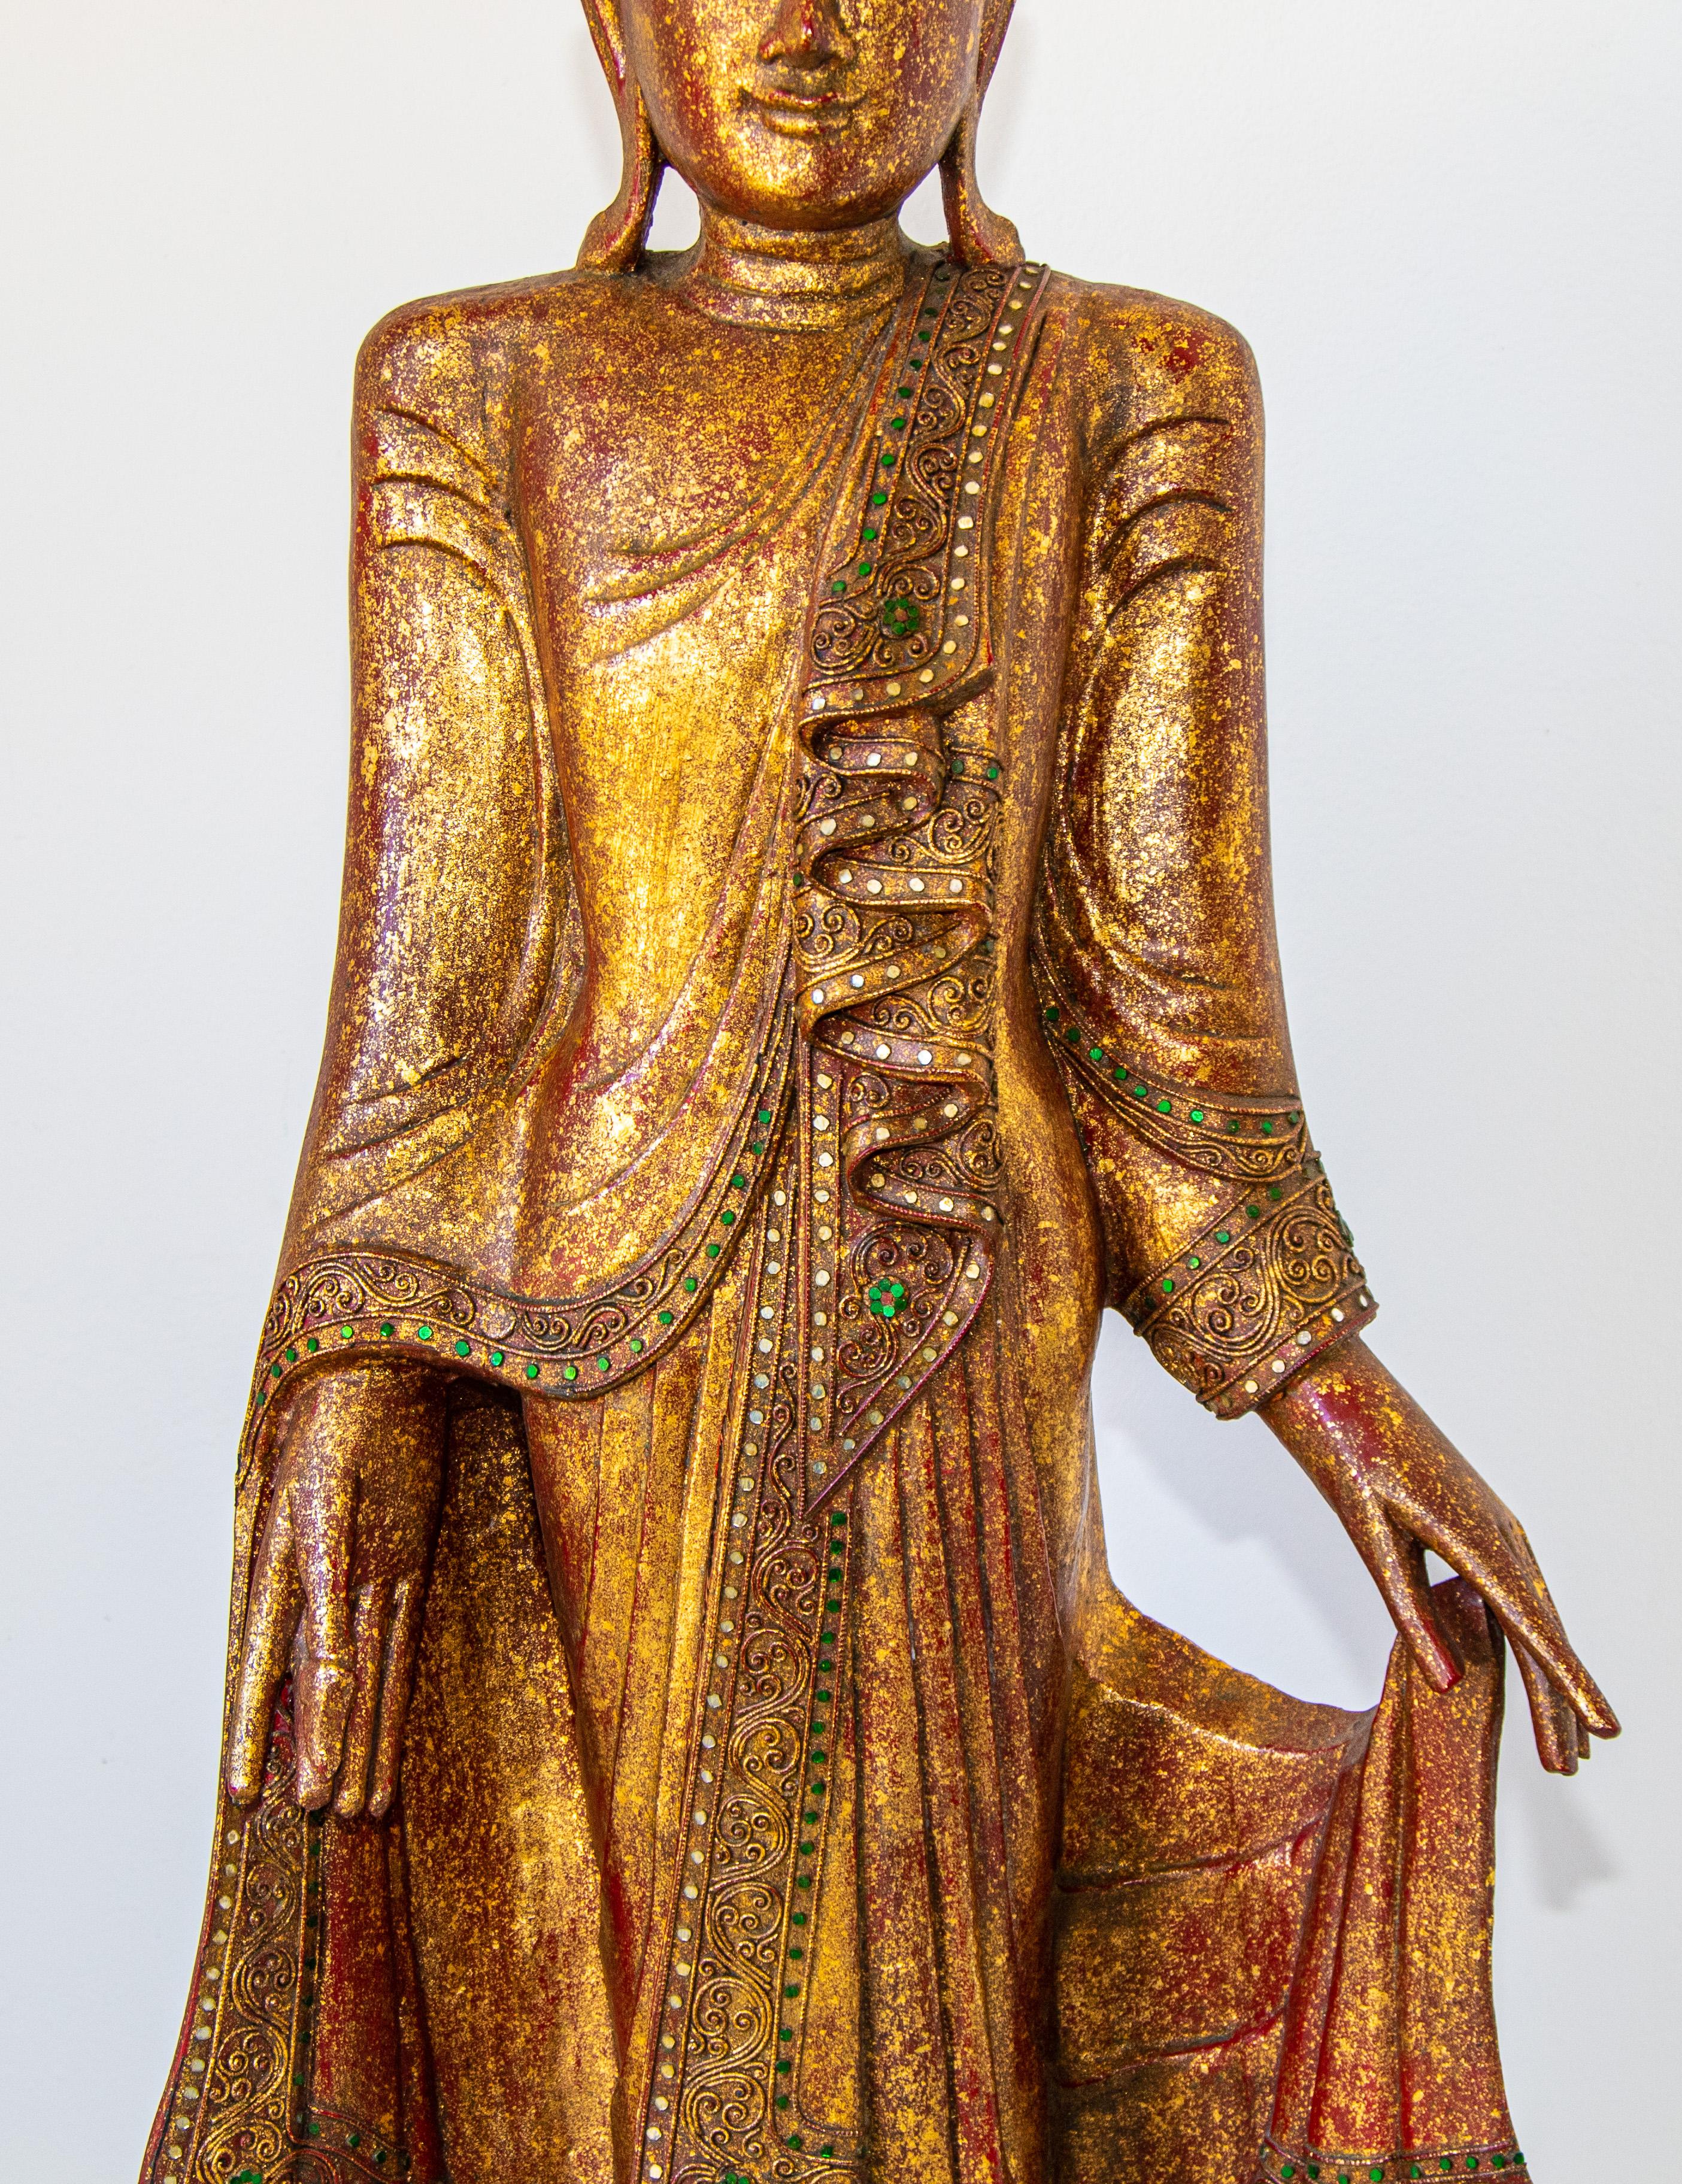 buddha statue skeleton inside